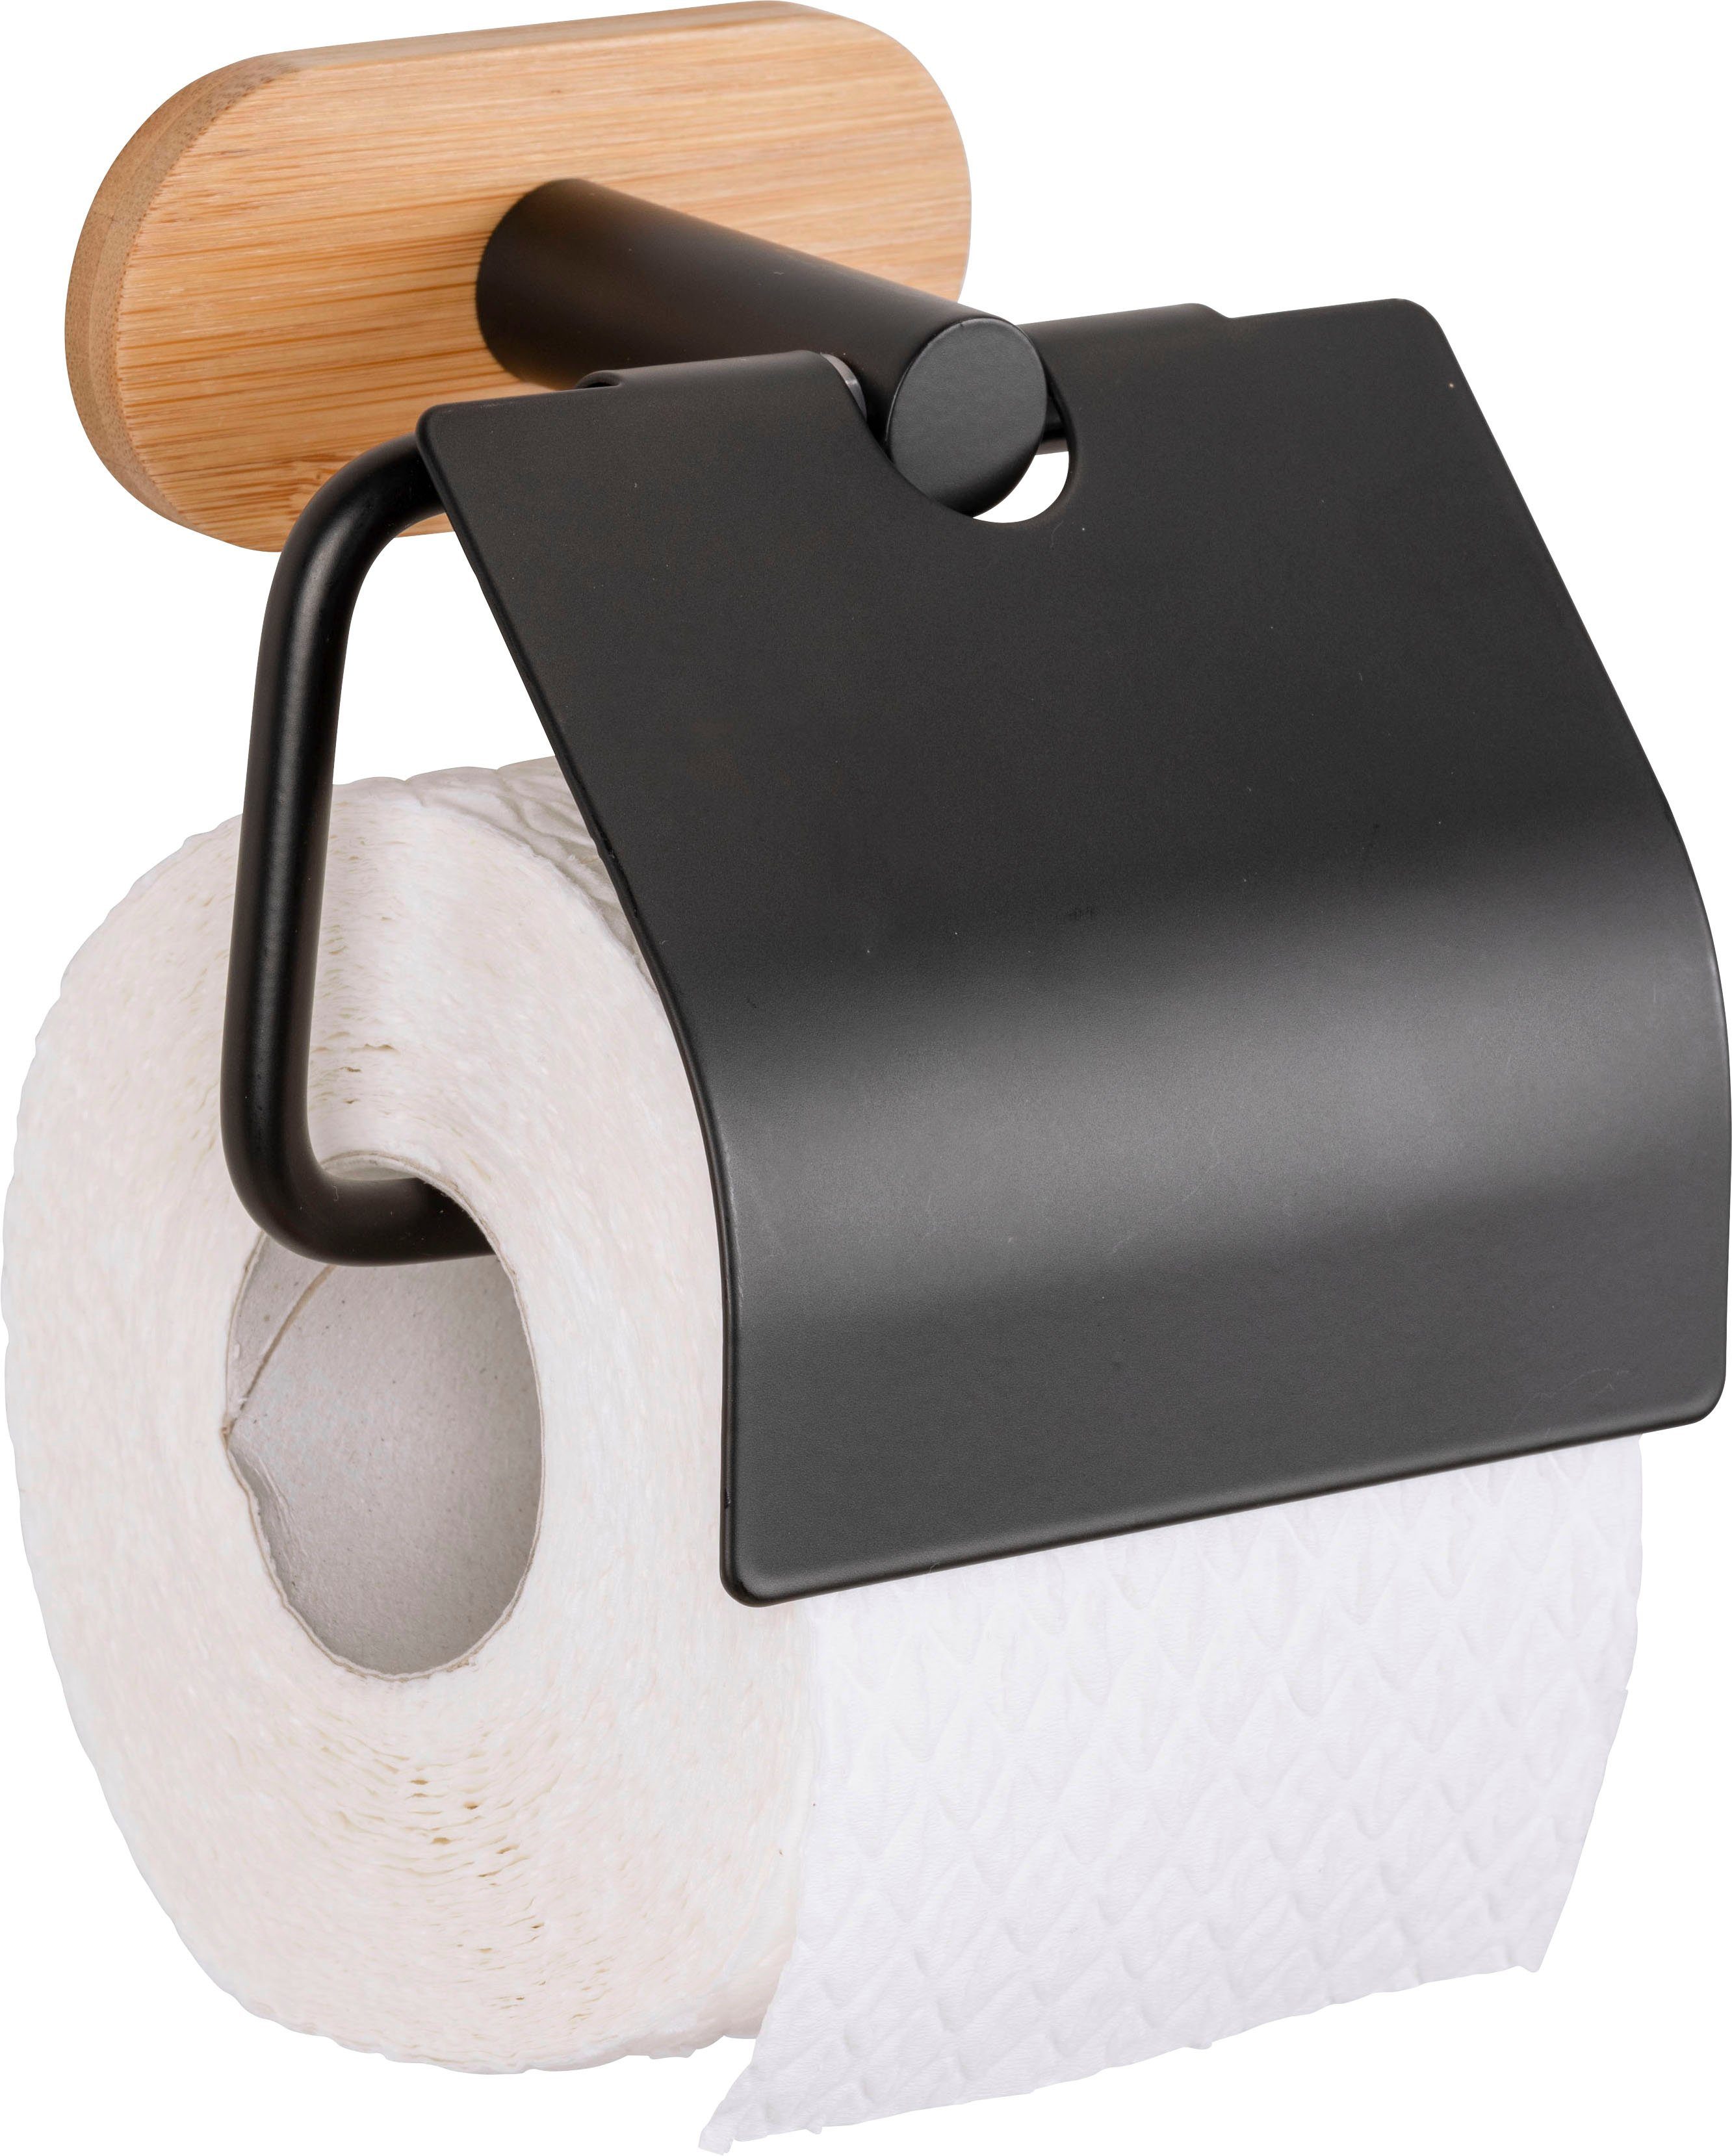 ohne bohren Befestigen Toilettenpapierhalter WENKO Bamboo, Turbo-Loc® Orea